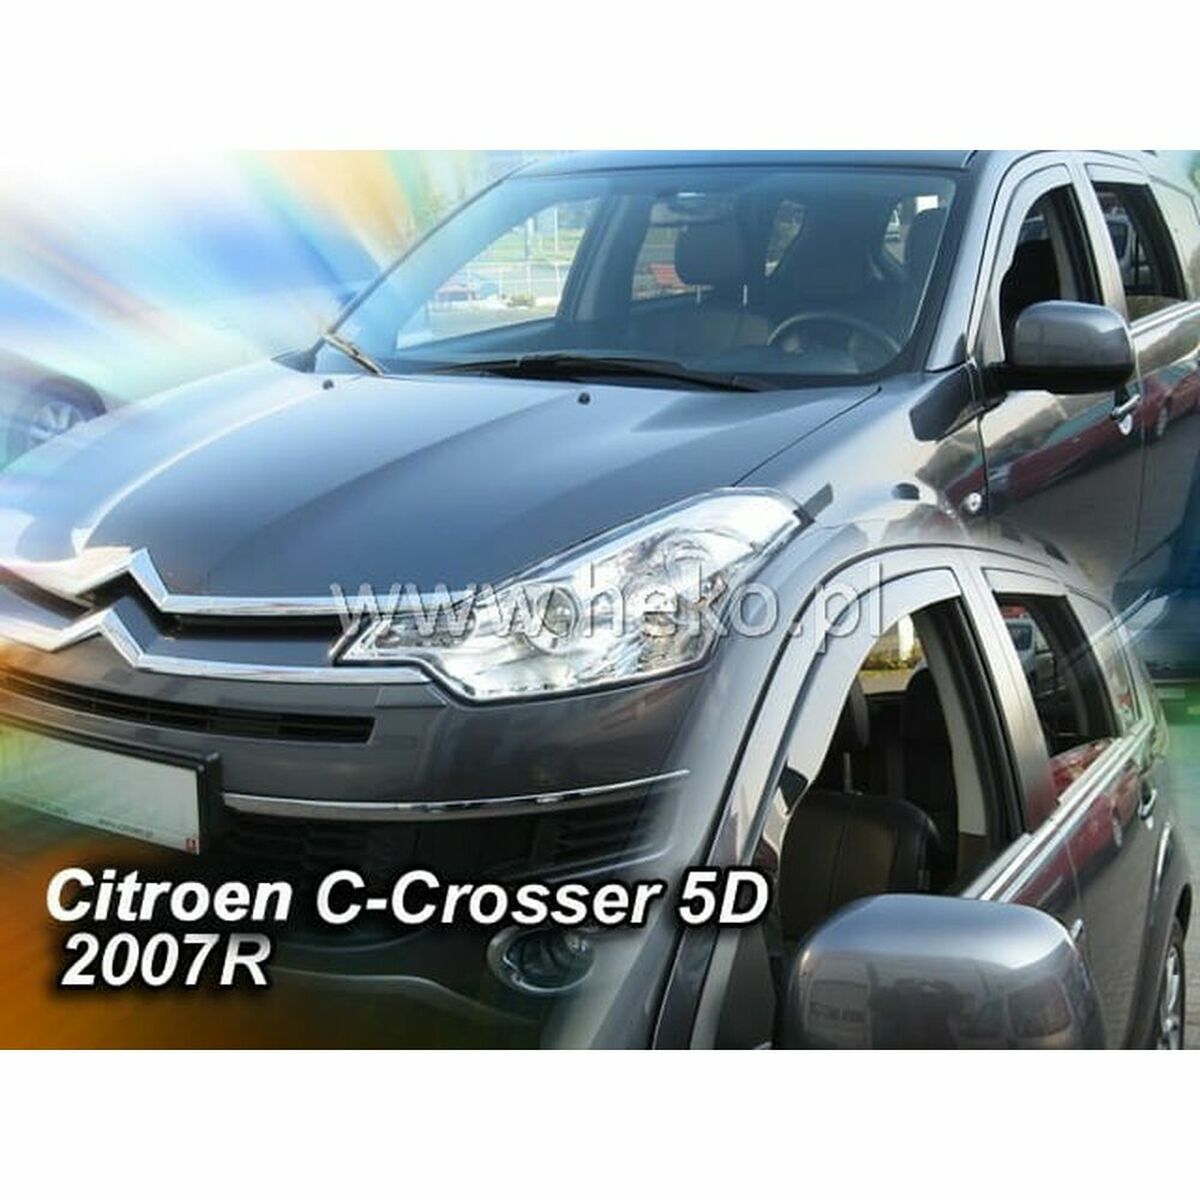 Chuventos para Citroën C-Crosser e Peugeot 4007 (a partir de 2007)